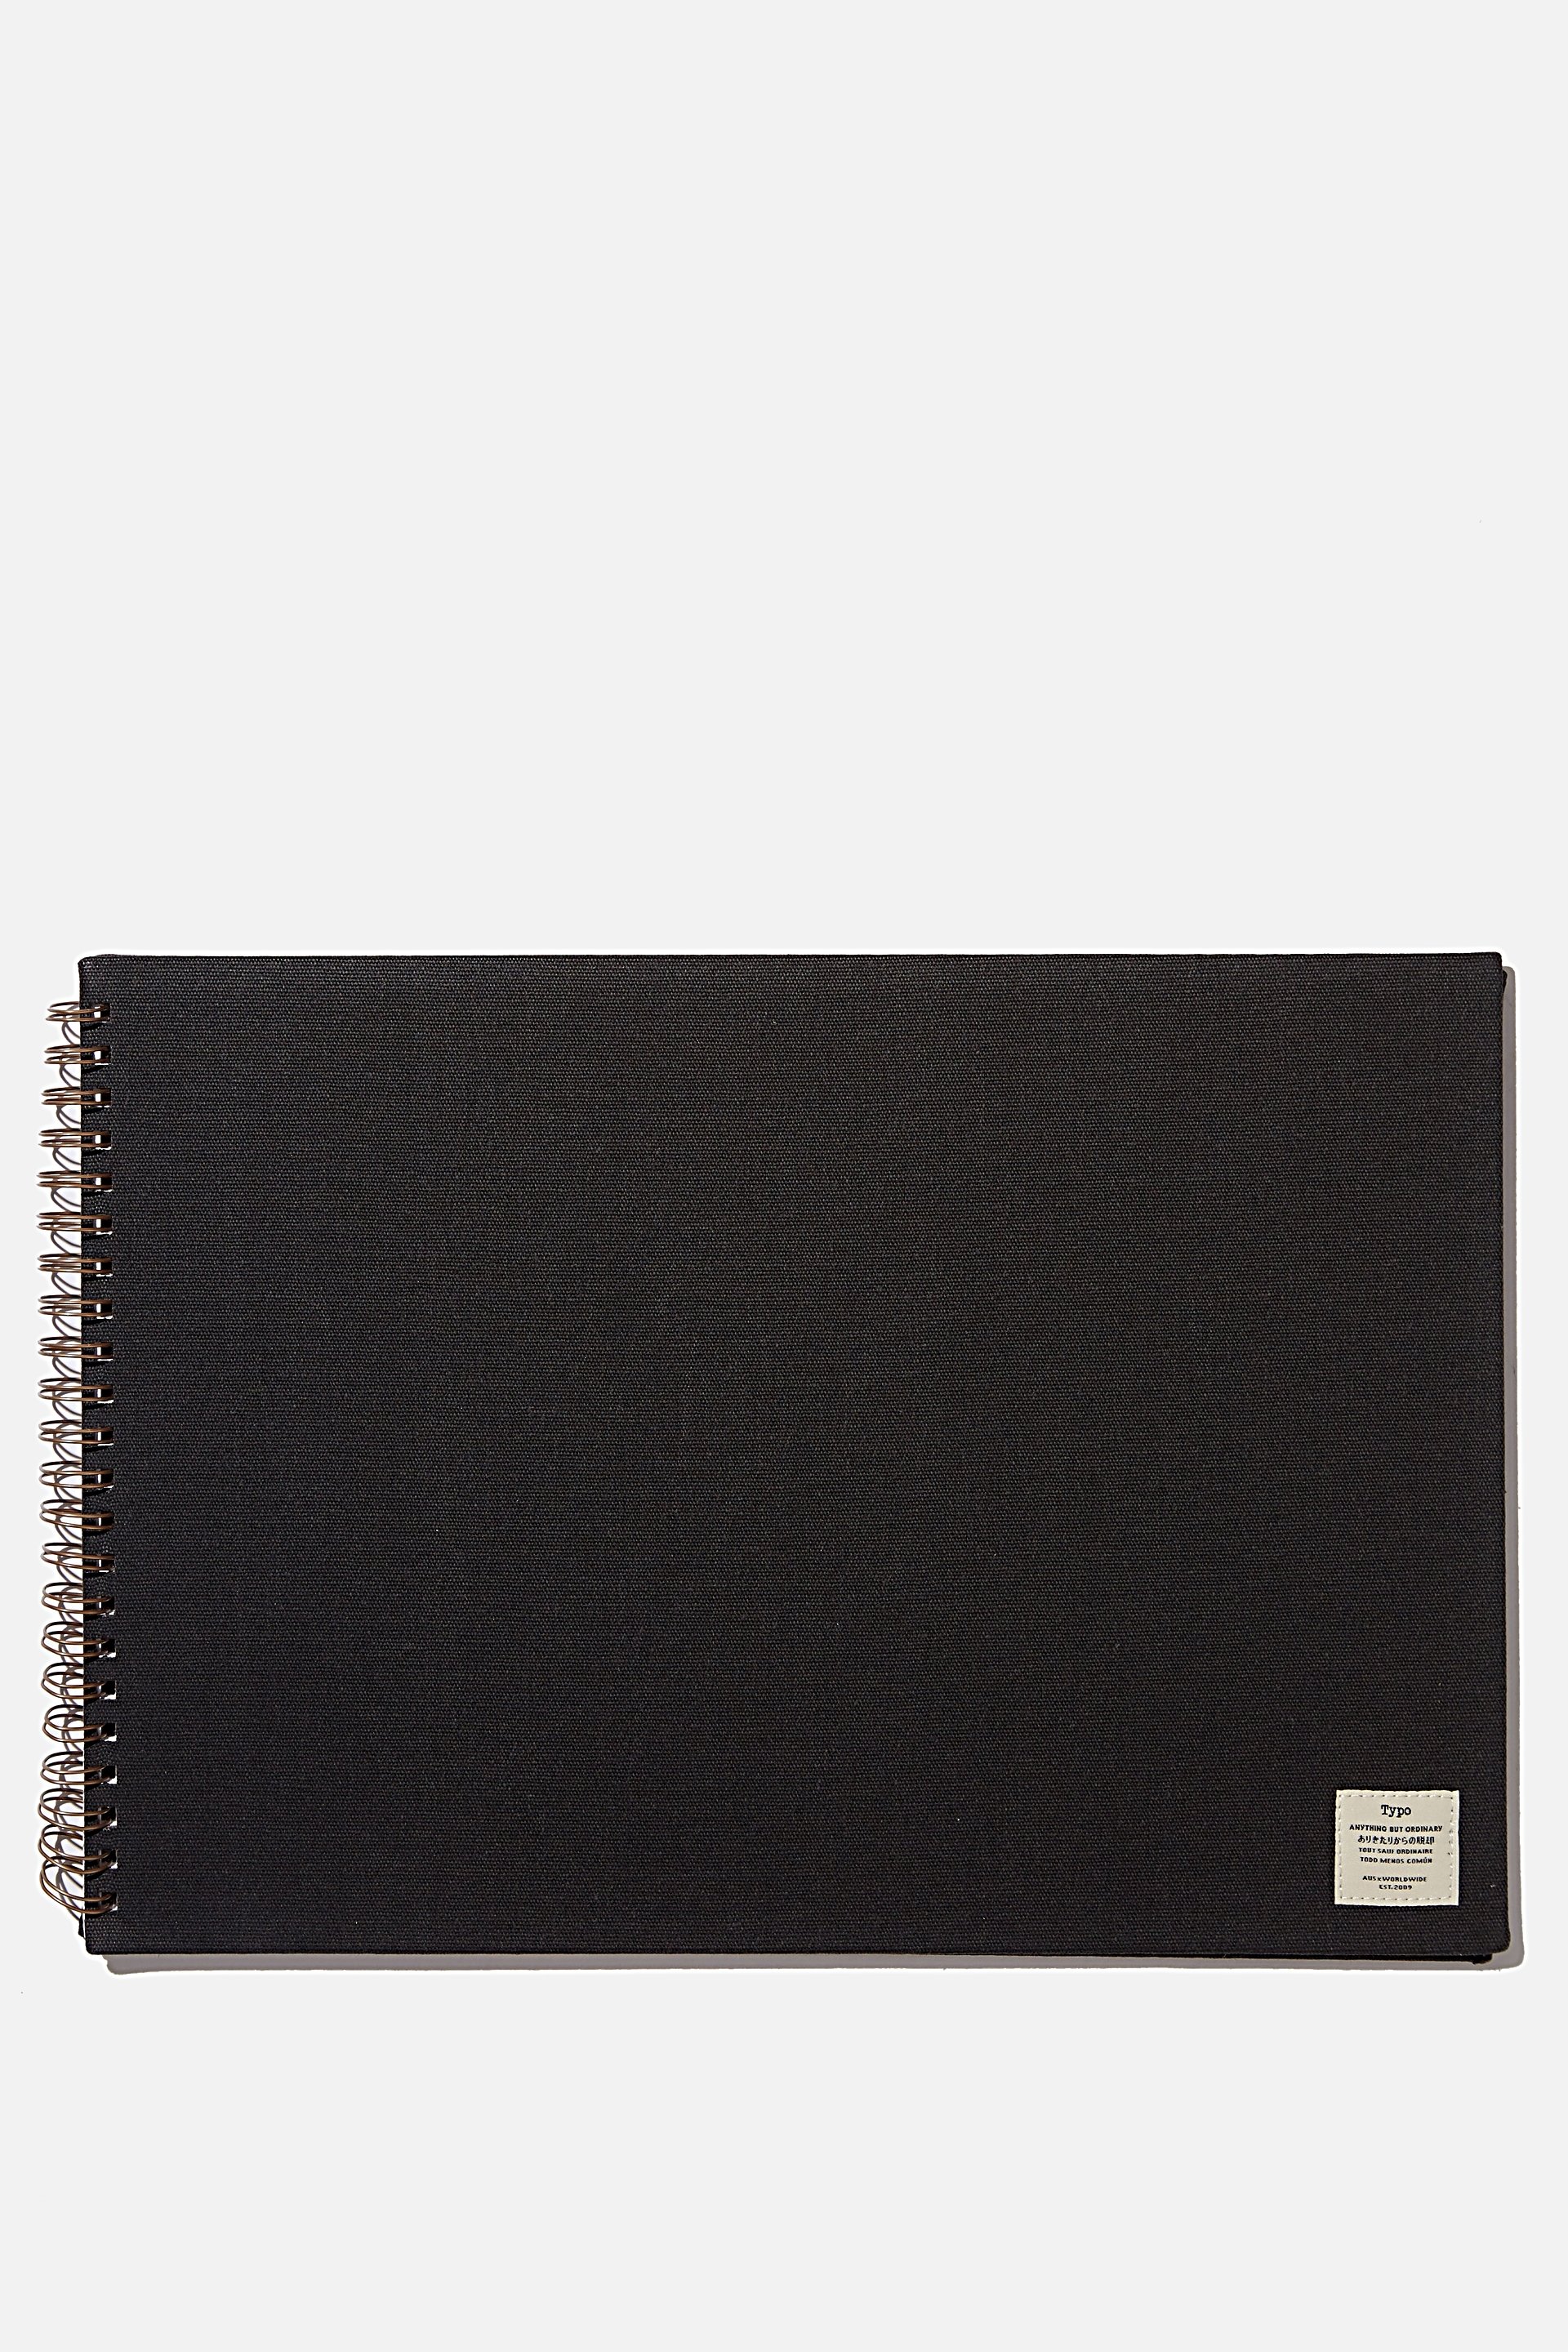 Typo - A3 Spiral Sketch Book - Black